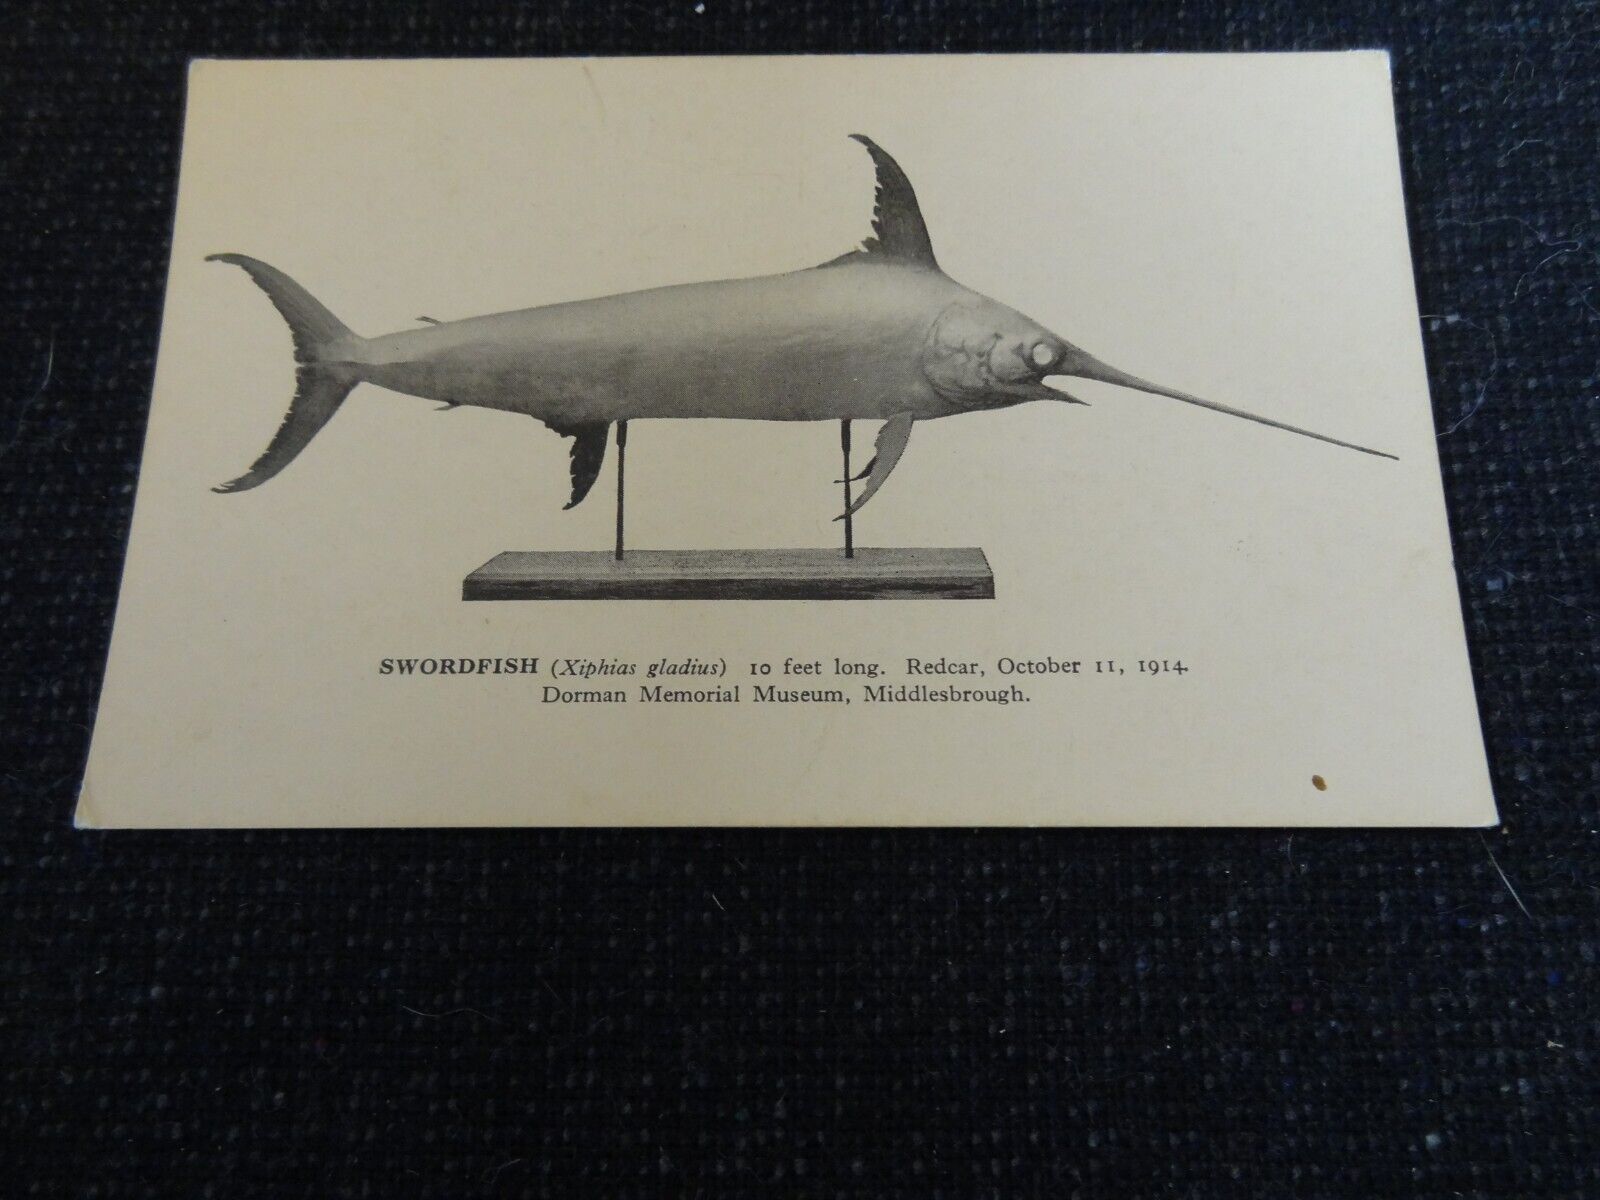 House Clearance - swordfish dorman memorial museum middlesbrough service - 62143